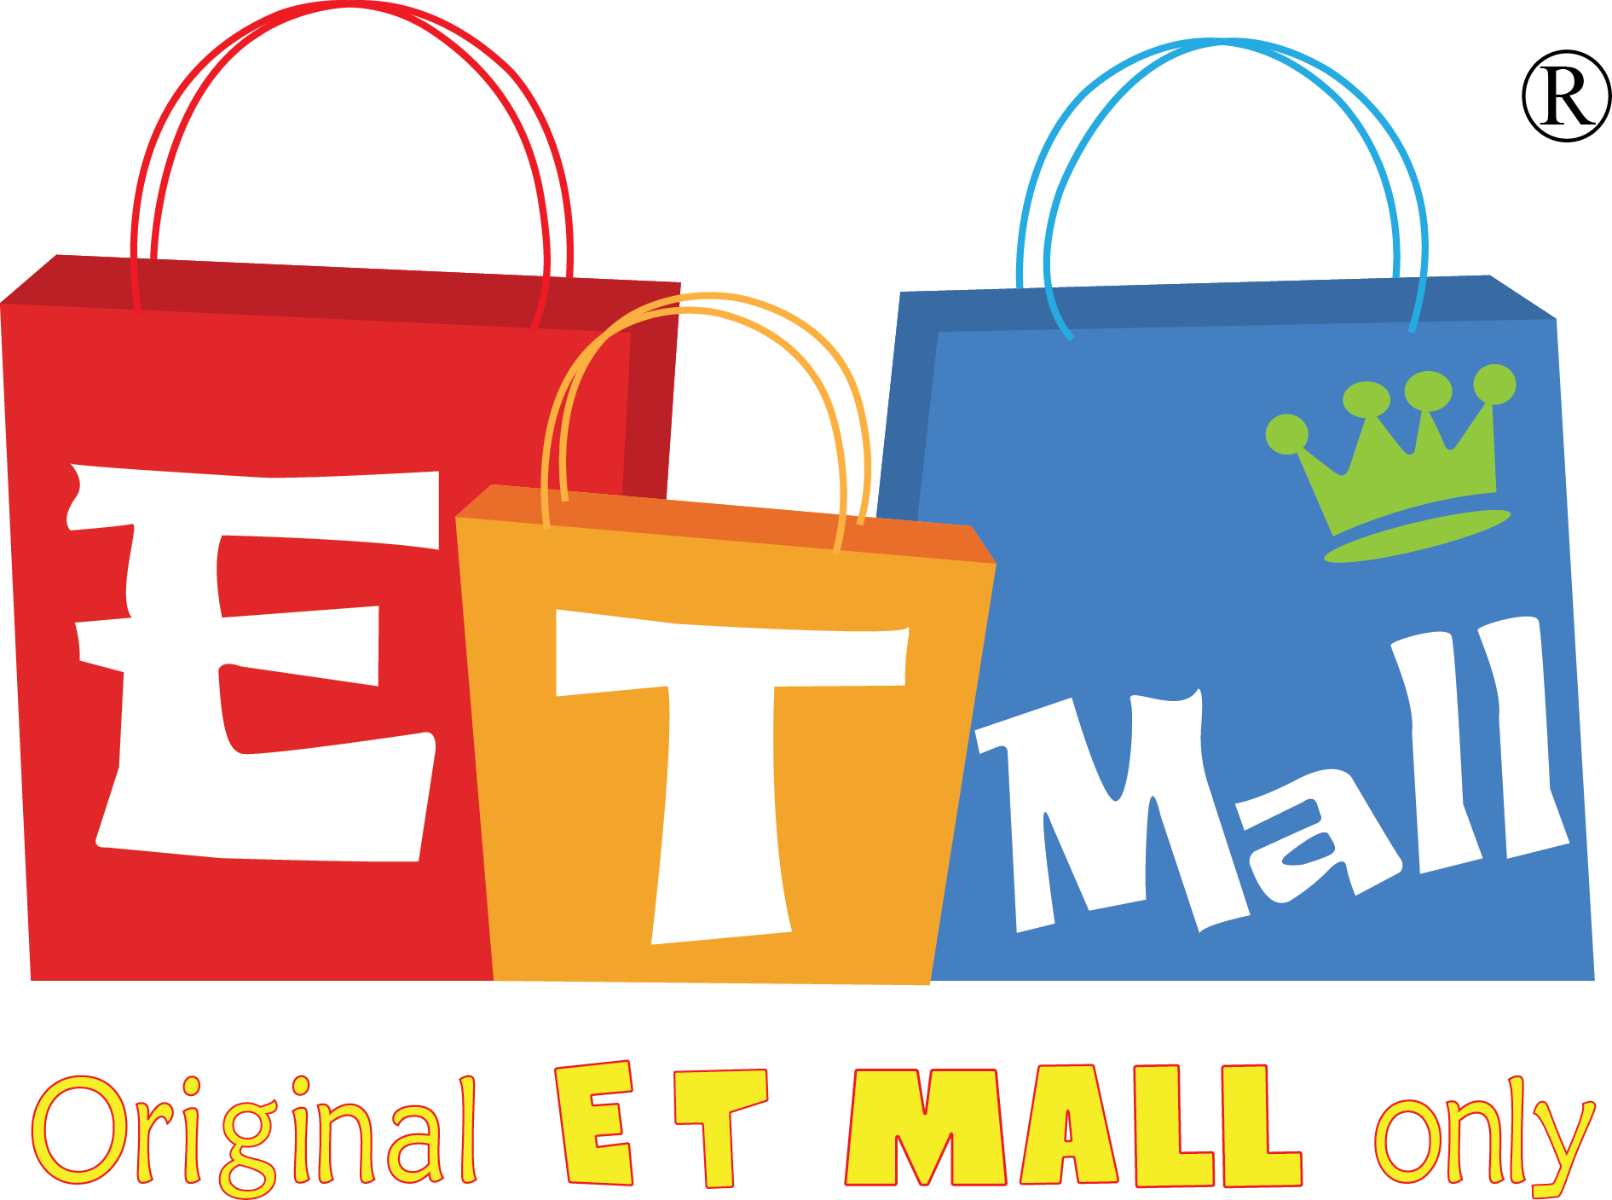 mall clipart shopping bag